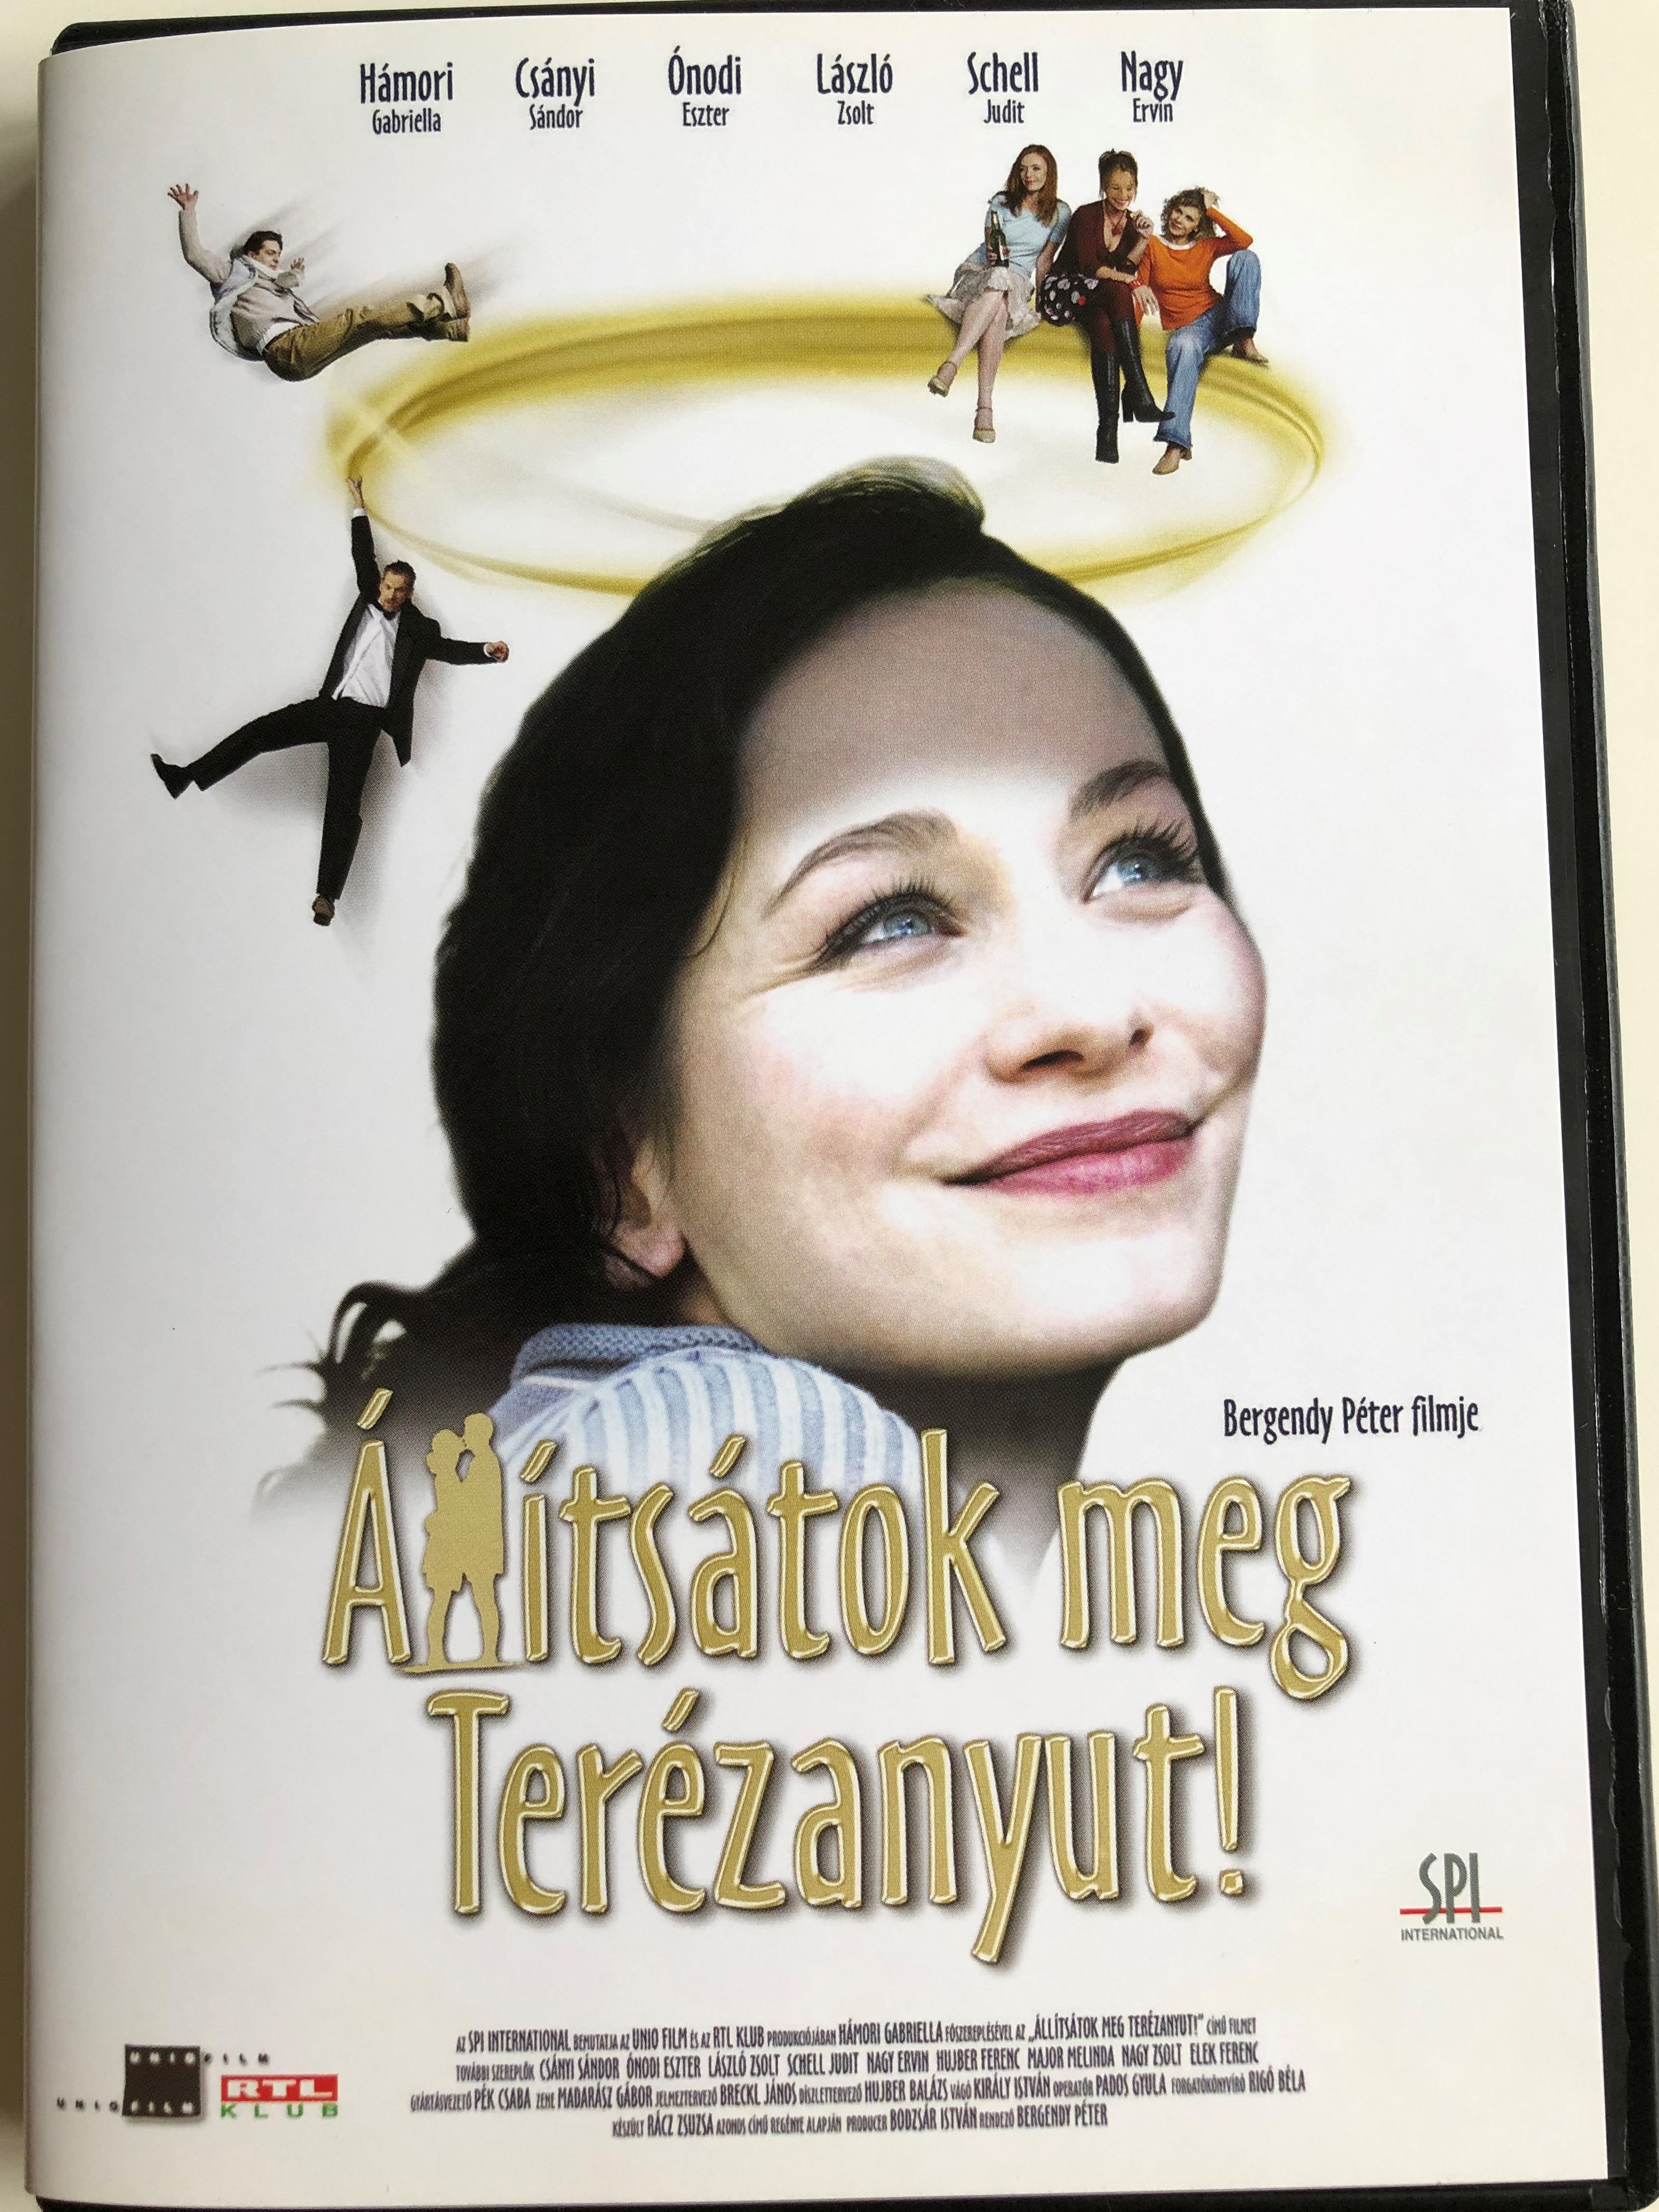 -ll-ts-tok-meg-ter-zanyut-dvd-2004-directed-by-bergendy-p-ter-starring-h-mori-gabriella-cs-nyi-s-ndor-nodi-eszter-l-zsl-zsolt-schell-judit-nagy-ervin-hungarian-romantic-comedy-1-.jpg